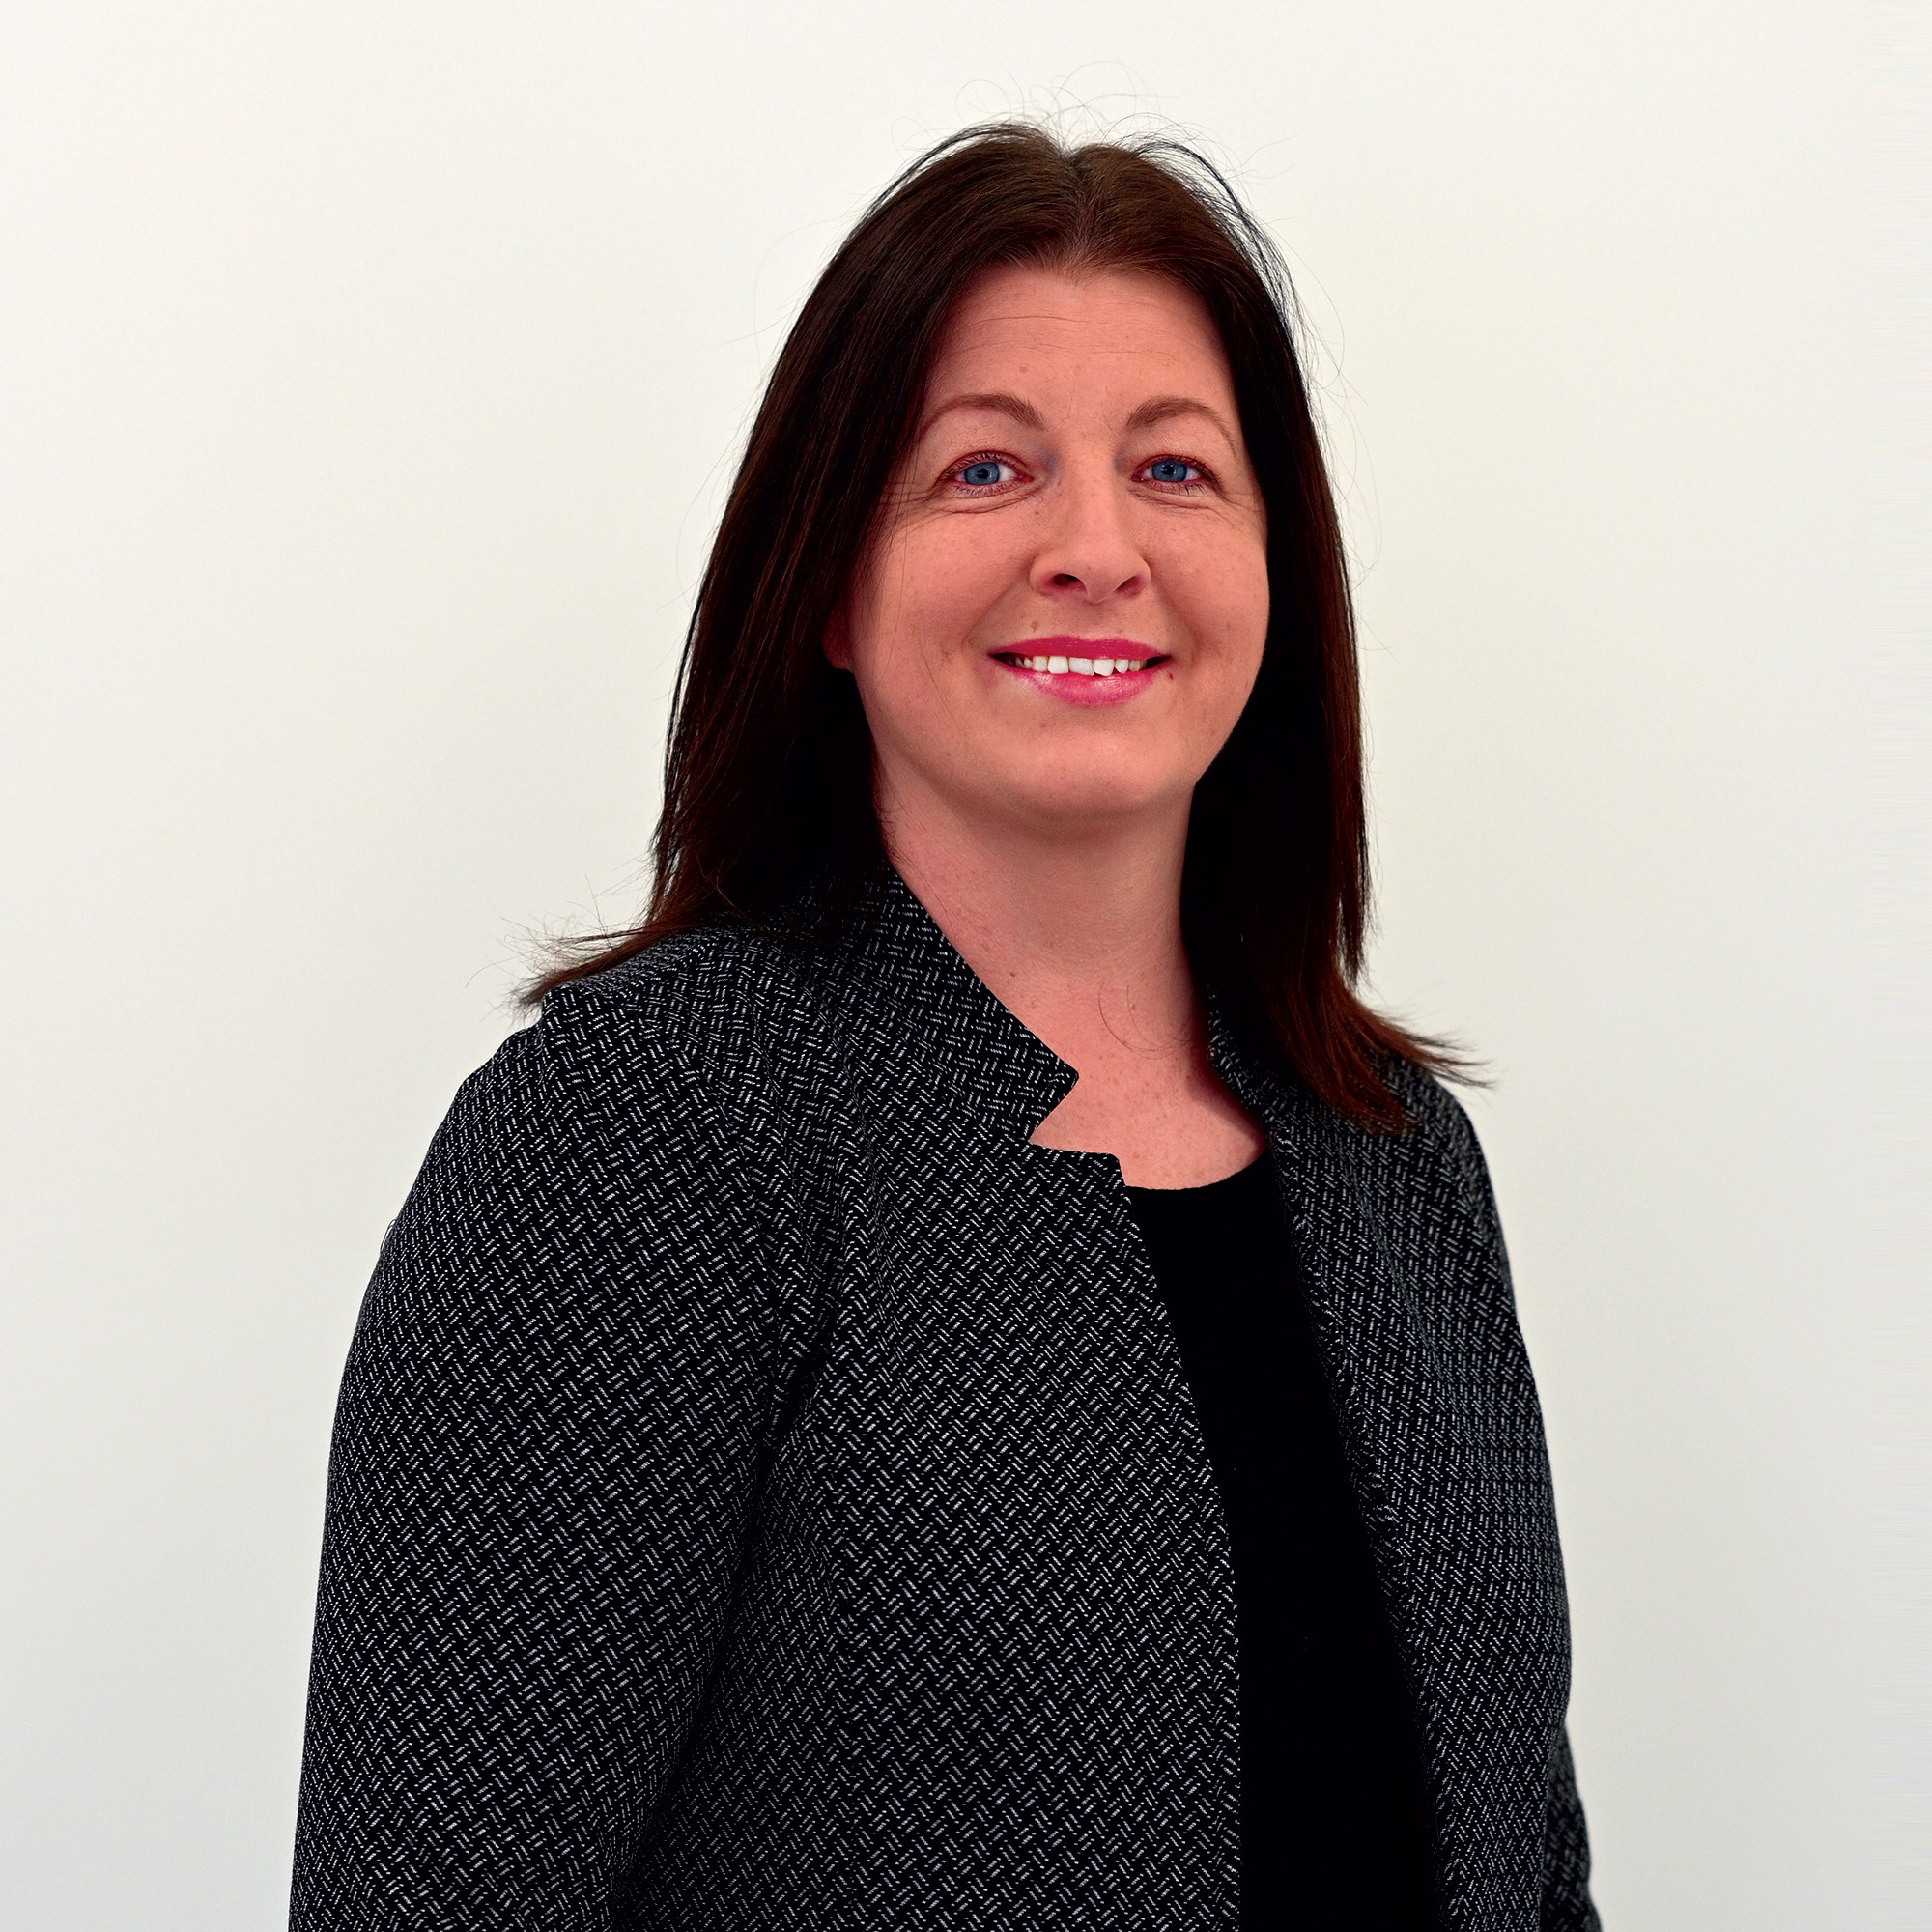 Miriam Brosnan - Office Administrator with Irish Drain Services